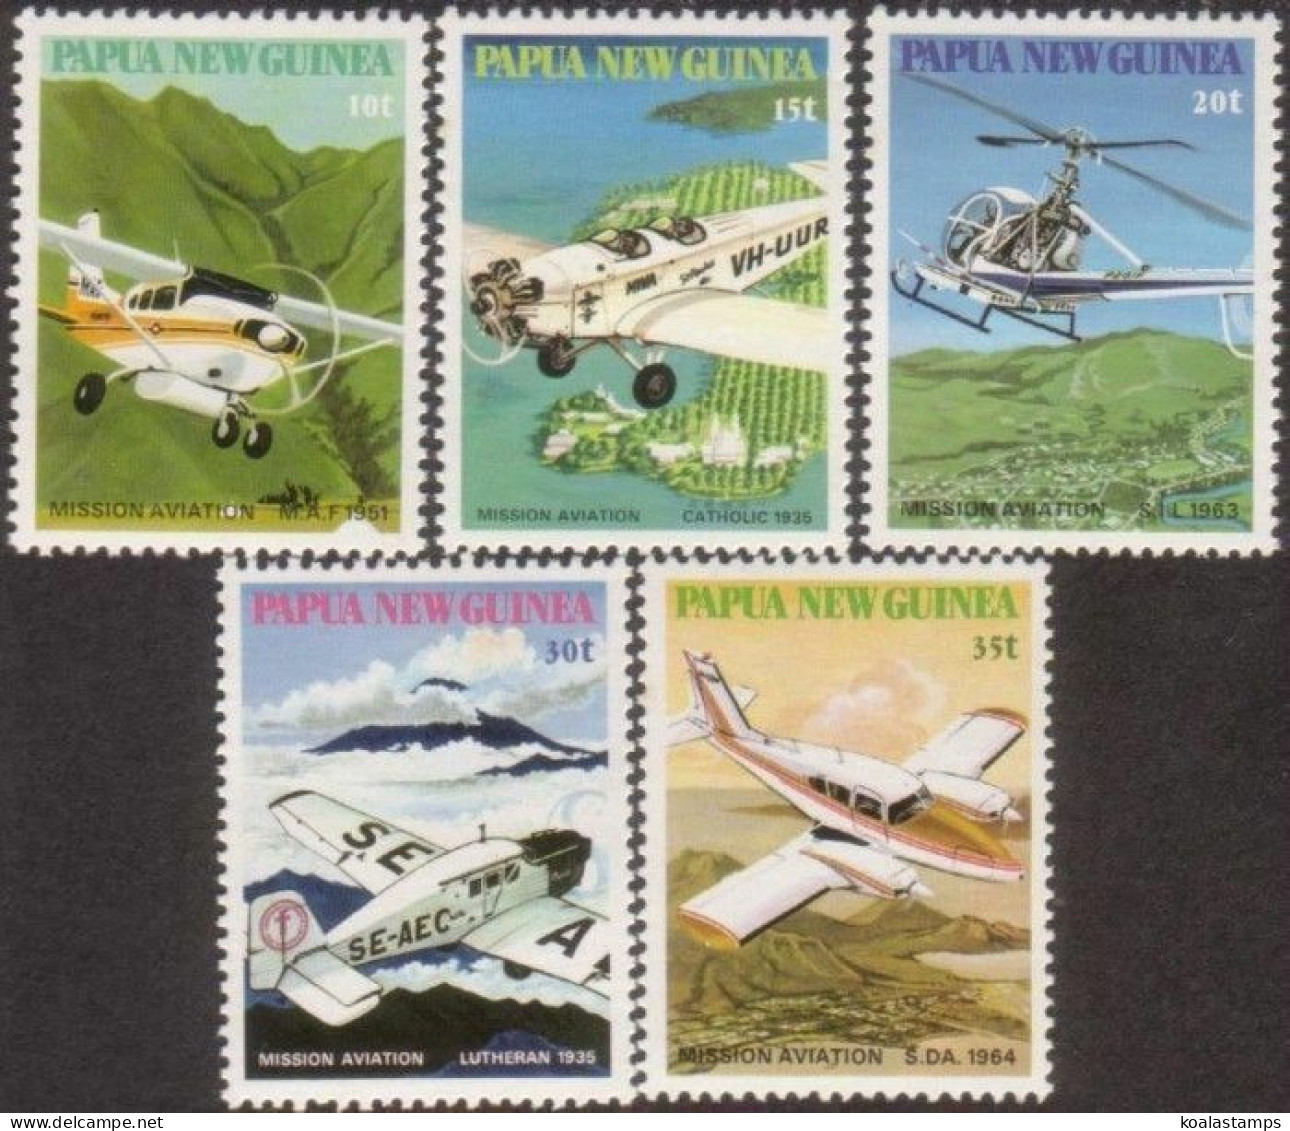 Papua New Guinea 1981 SG412-416 Mission Avation Set MNH - Papua New Guinea